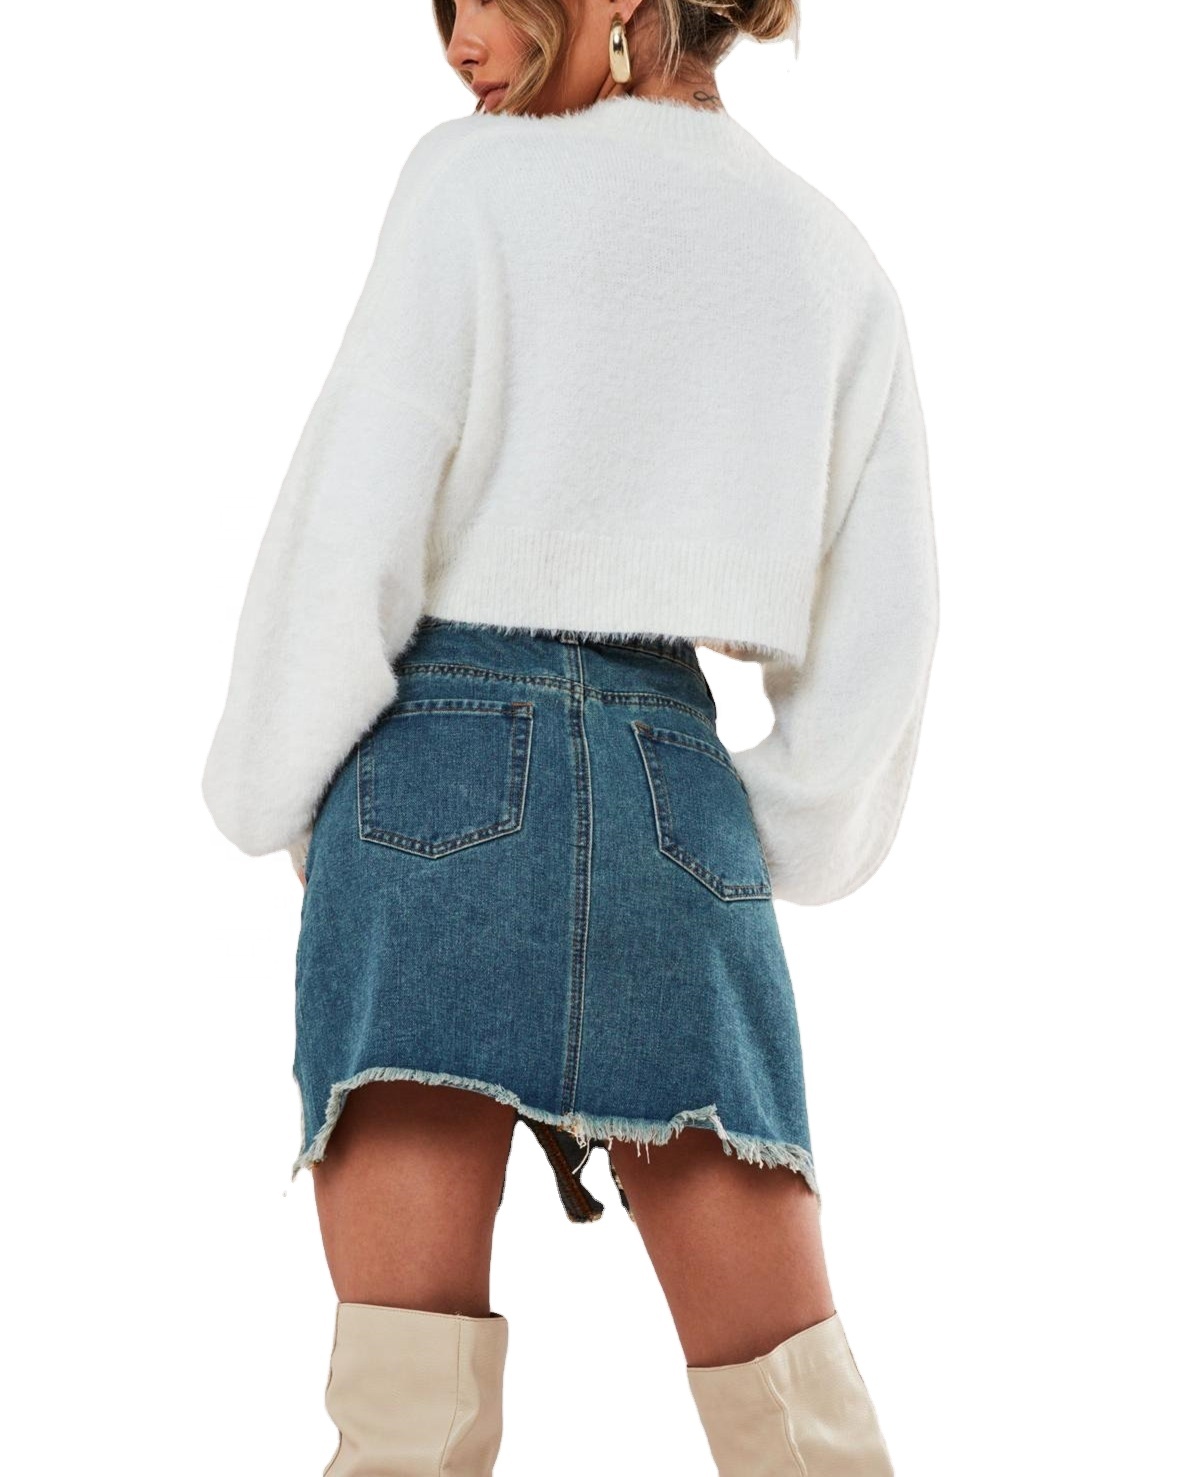 Top Selling Wholesale High Waist SkirtsCasual Pockets Button Women Denim Skirts